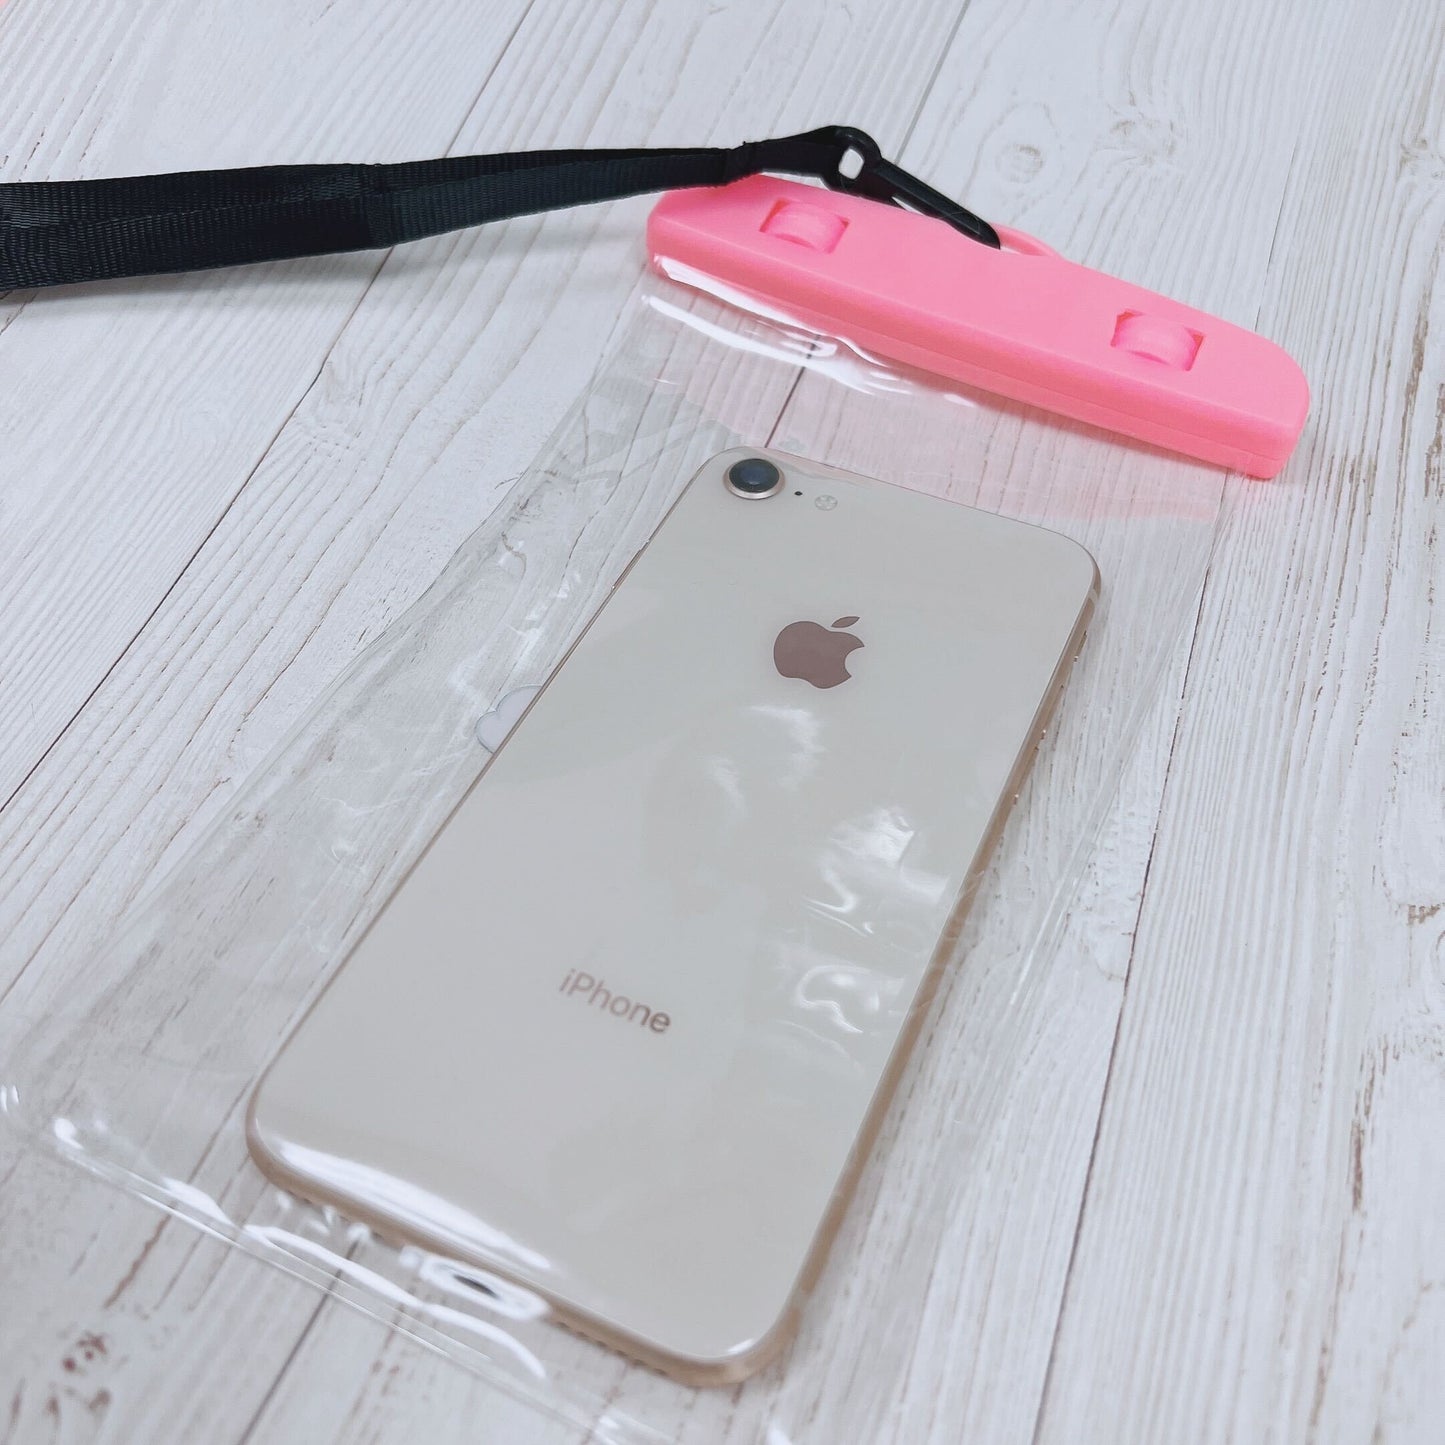 [Asamimi-chan] Waterproof smartphone case (Asamimi BASIC May) [Shipped in mid-July]